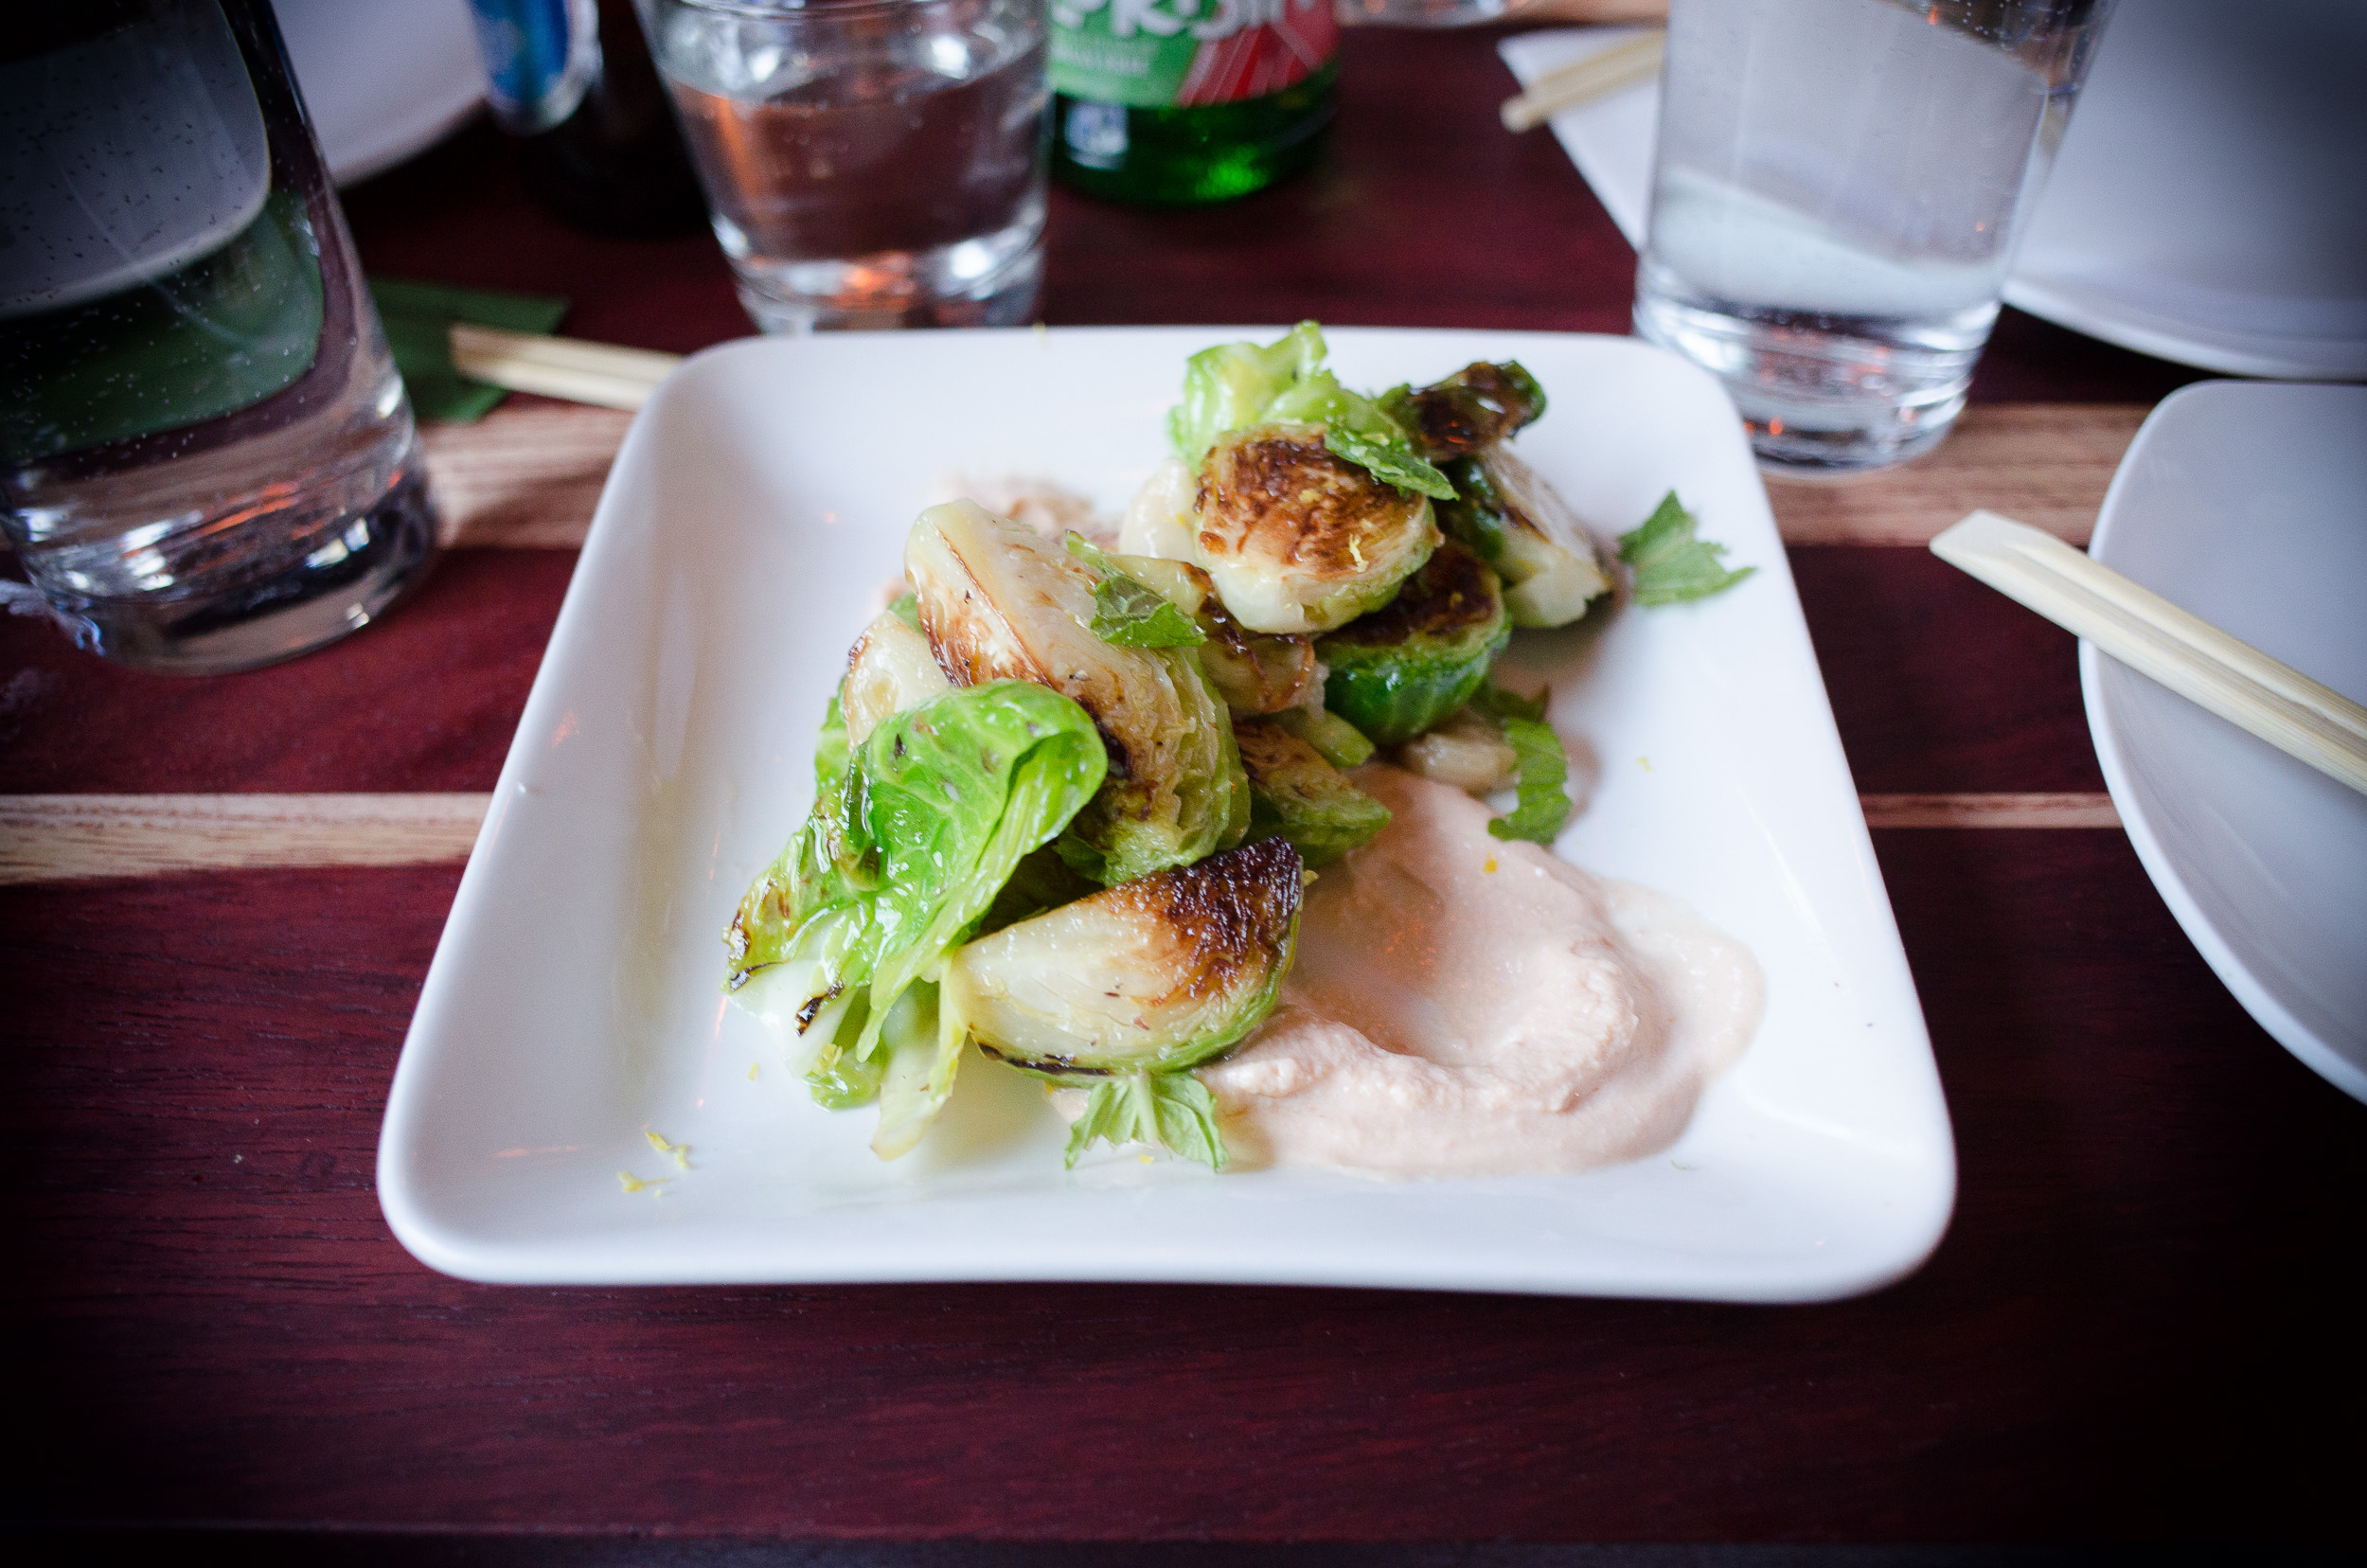 Roasted brussel sprout salad, shrimp-tofu schmear, garlic, mint